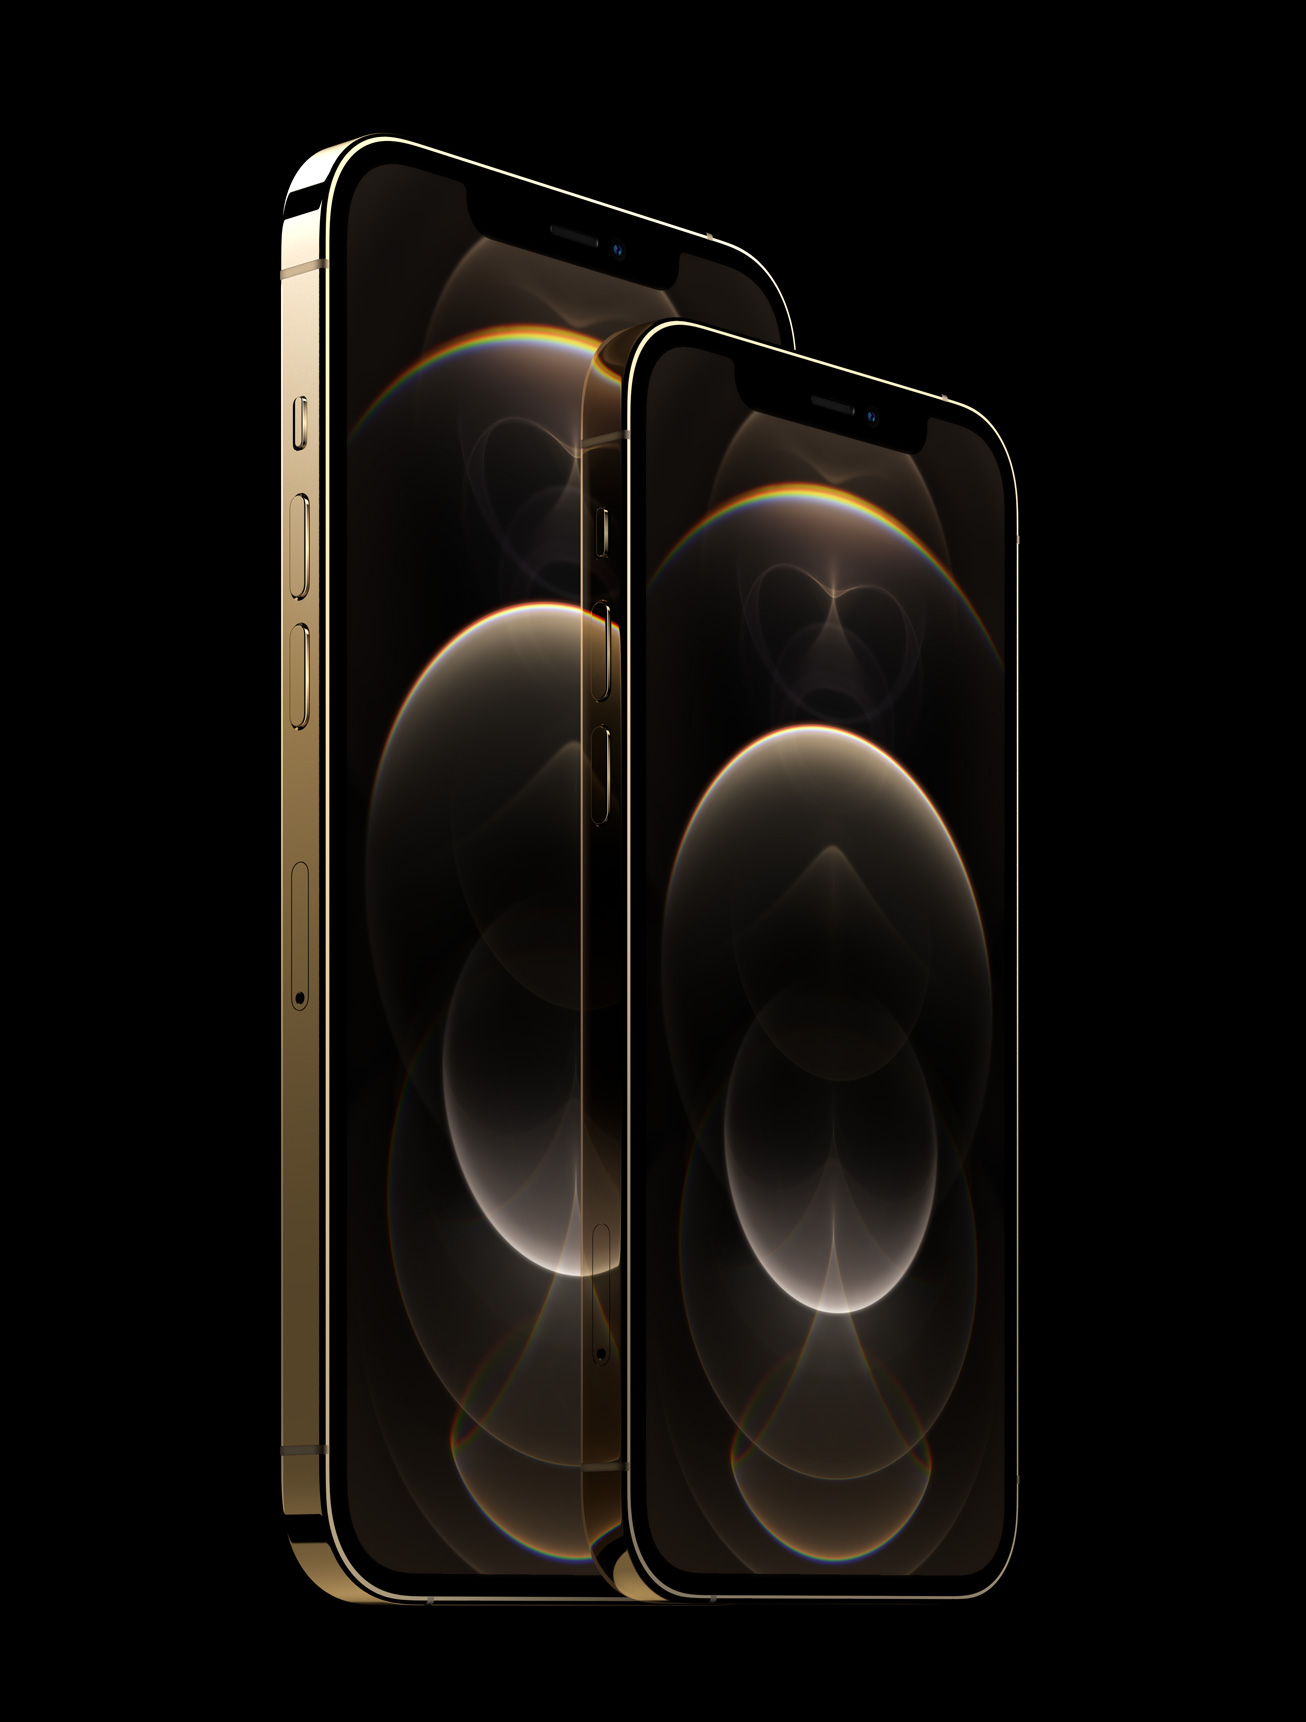 IPhone 12 Pro dan iPhone 12 Pro Max di finishing stainless steel emas